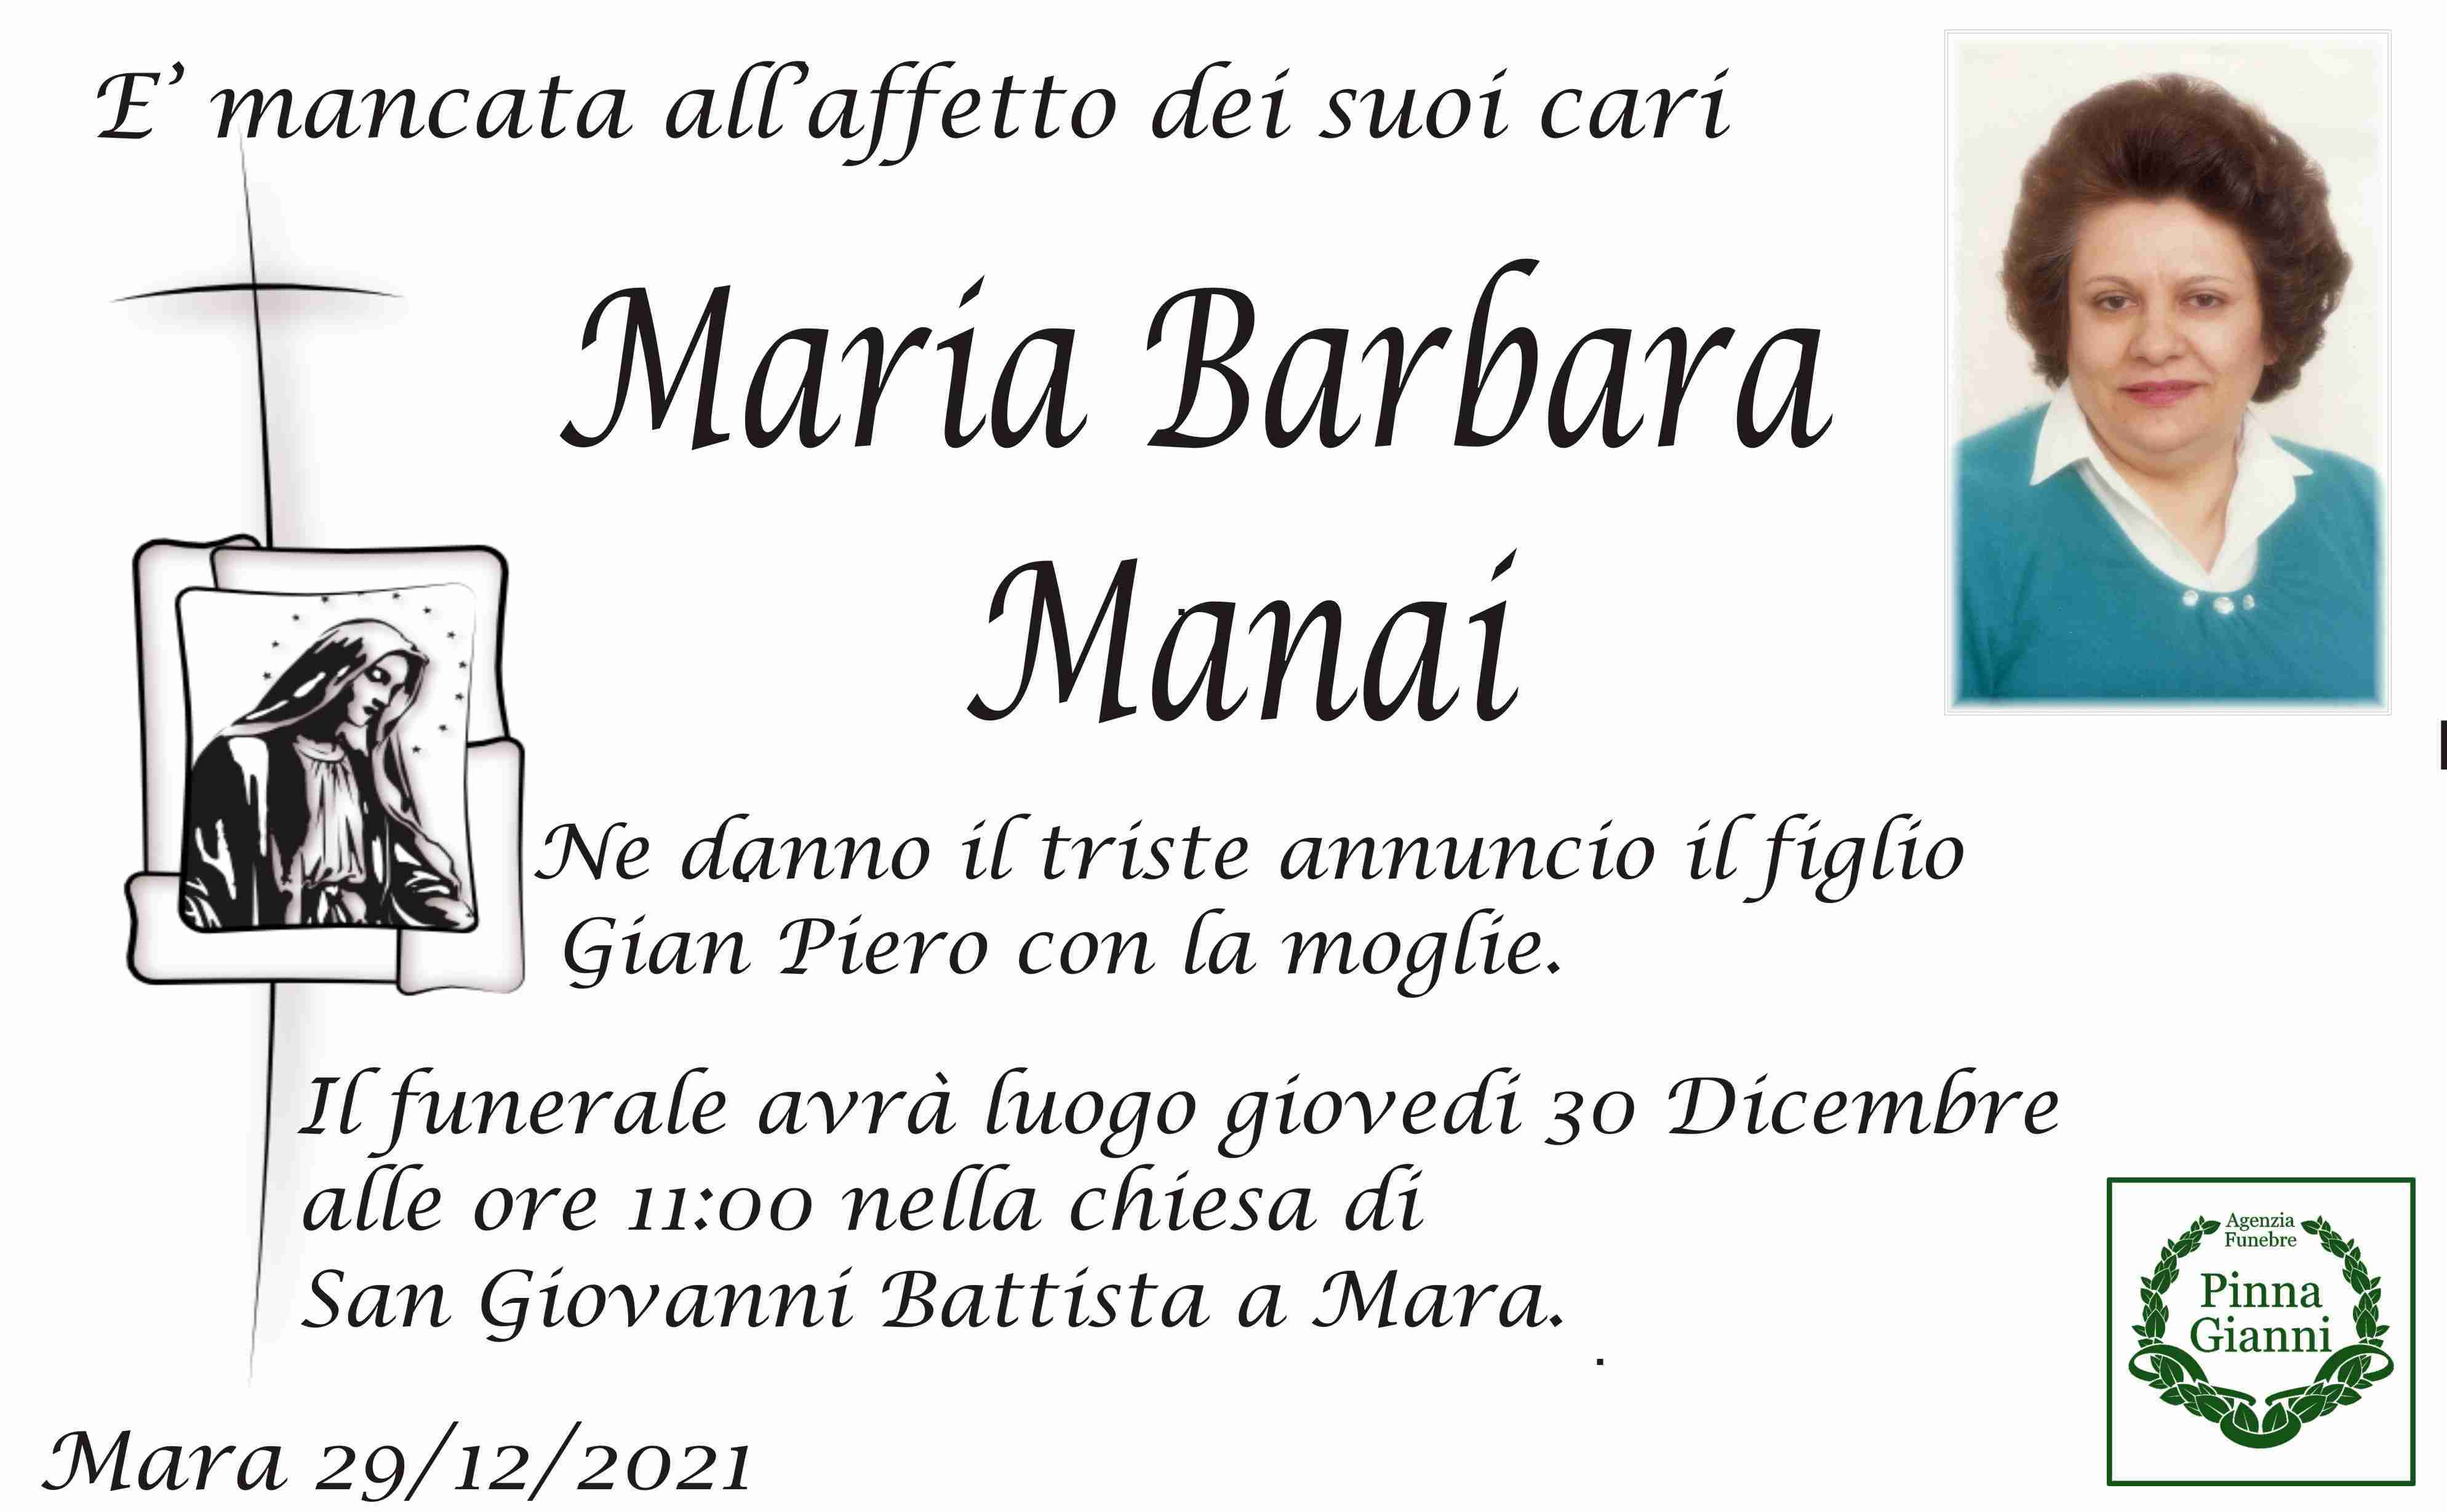 Maria Barbara Manai